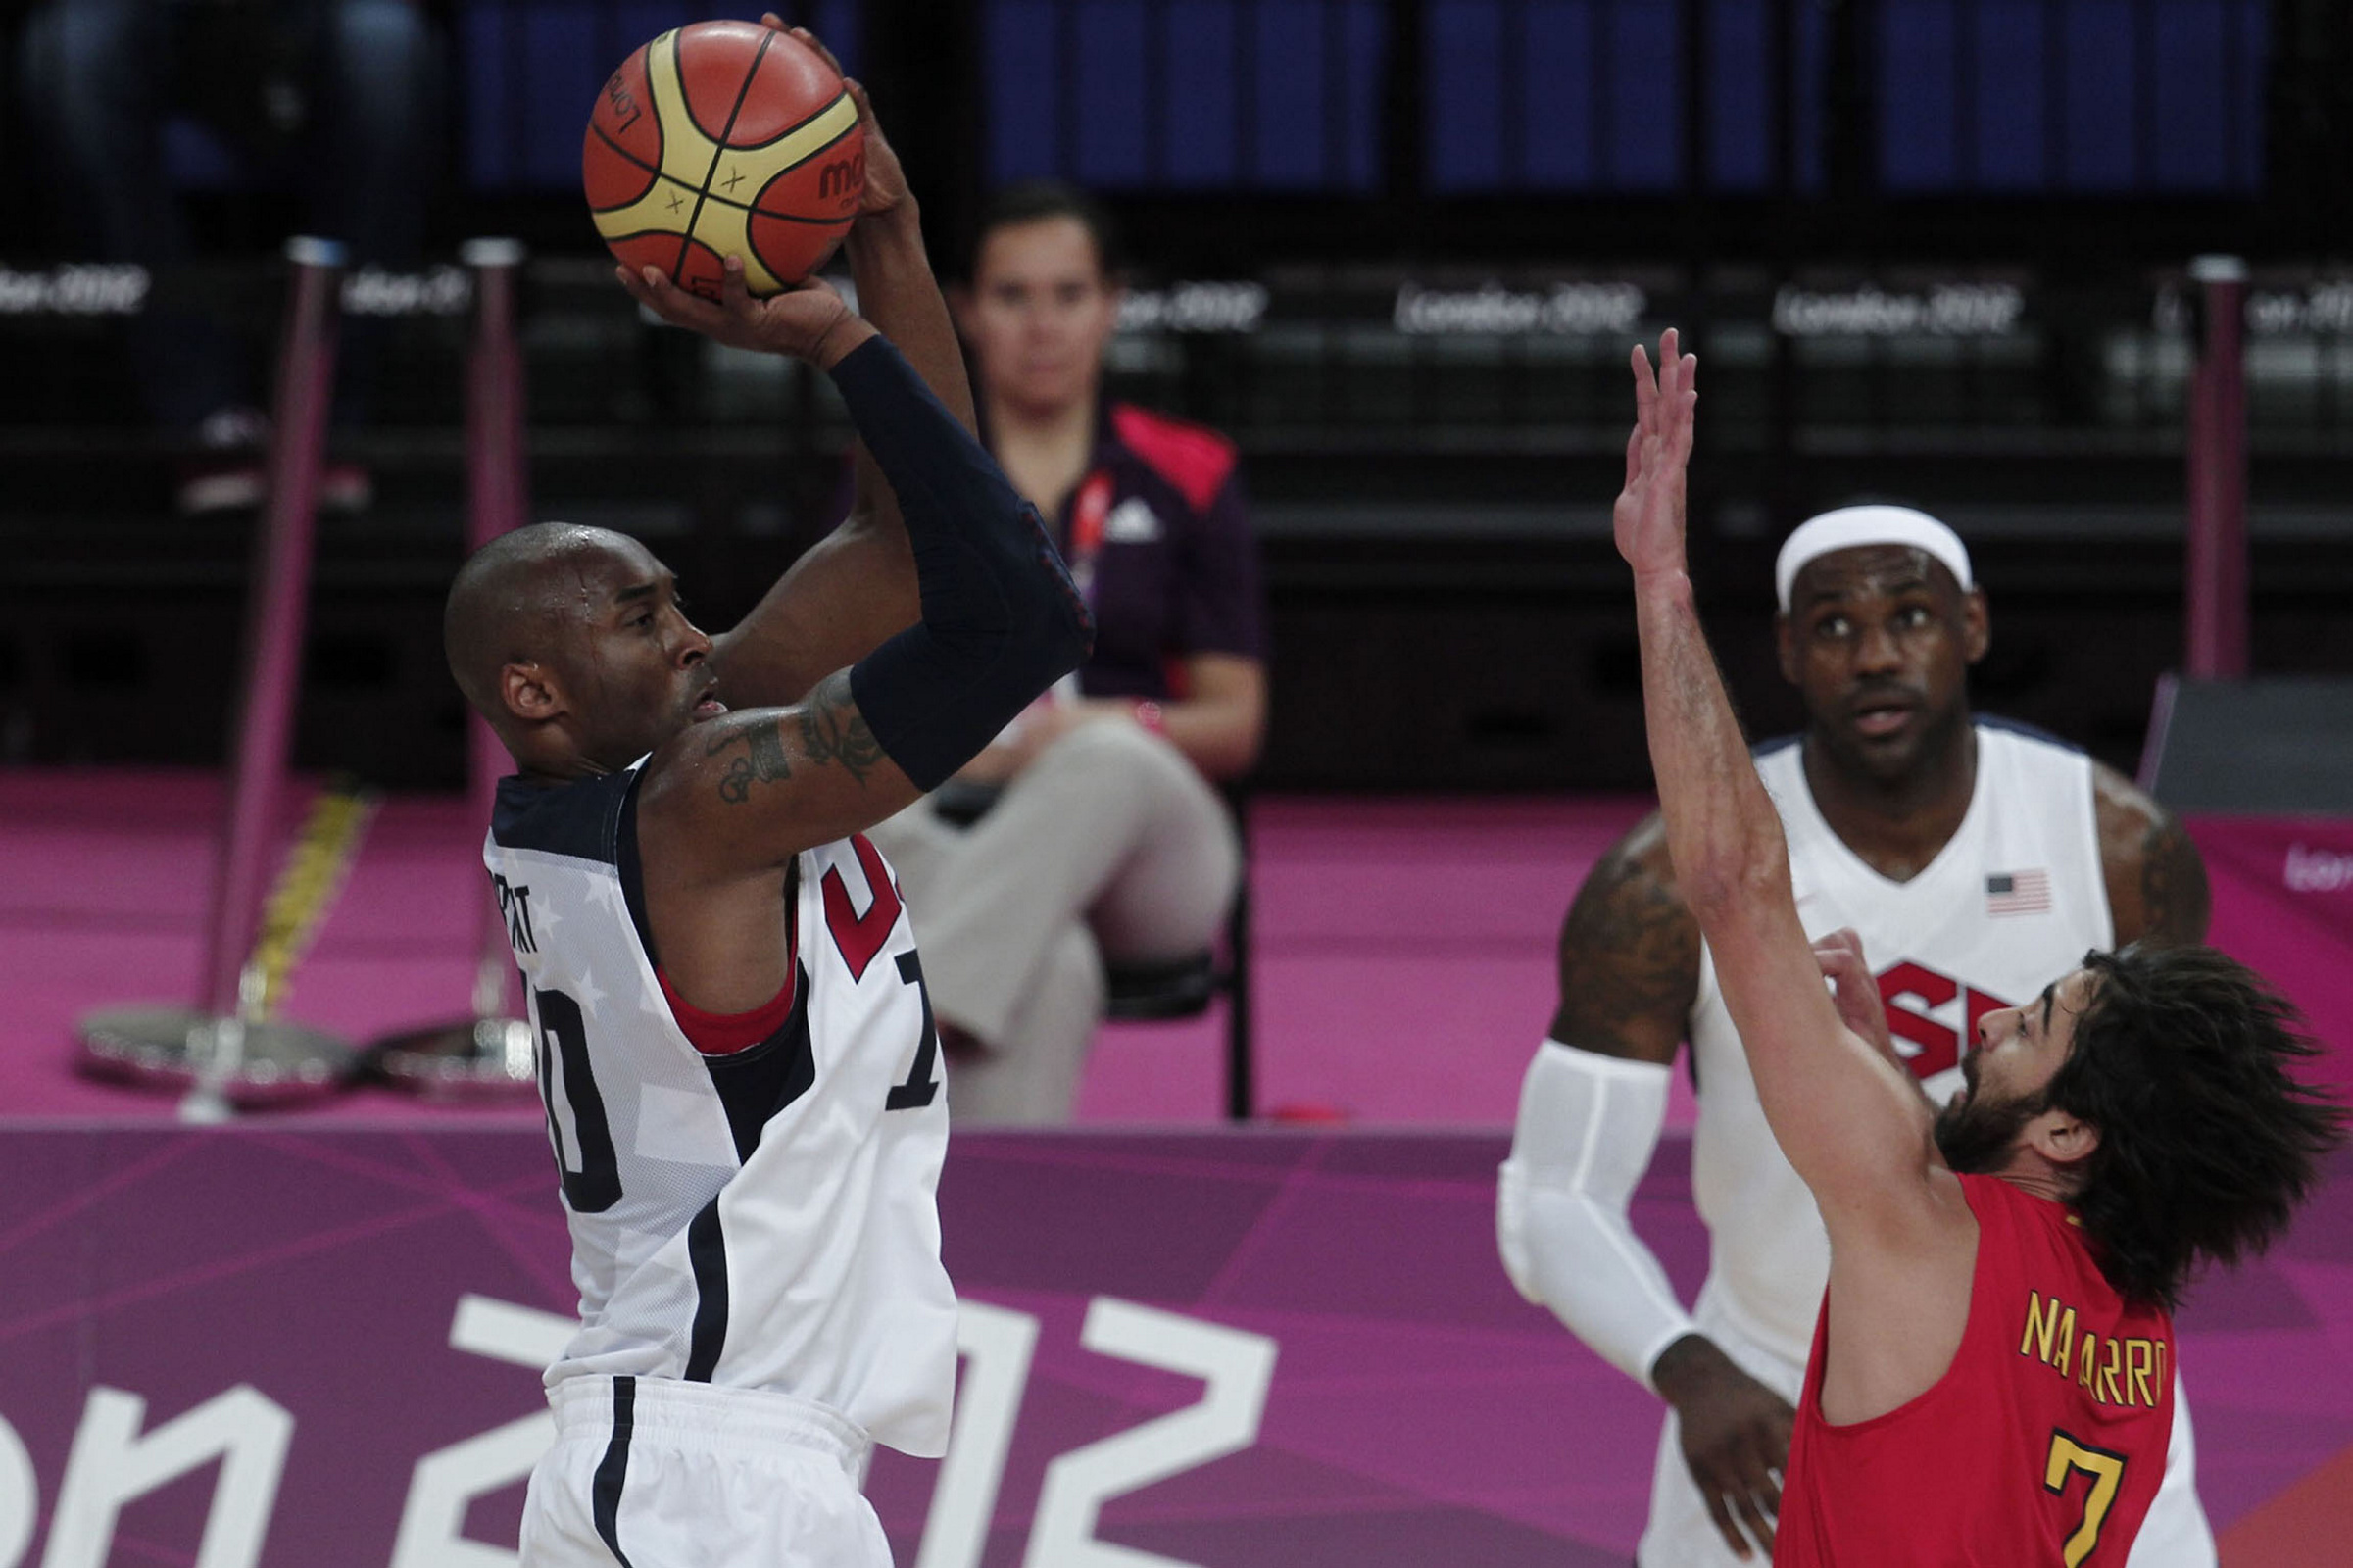 Kobe Bryant abrazó poder del deporte para cambiar a las personas: Bach